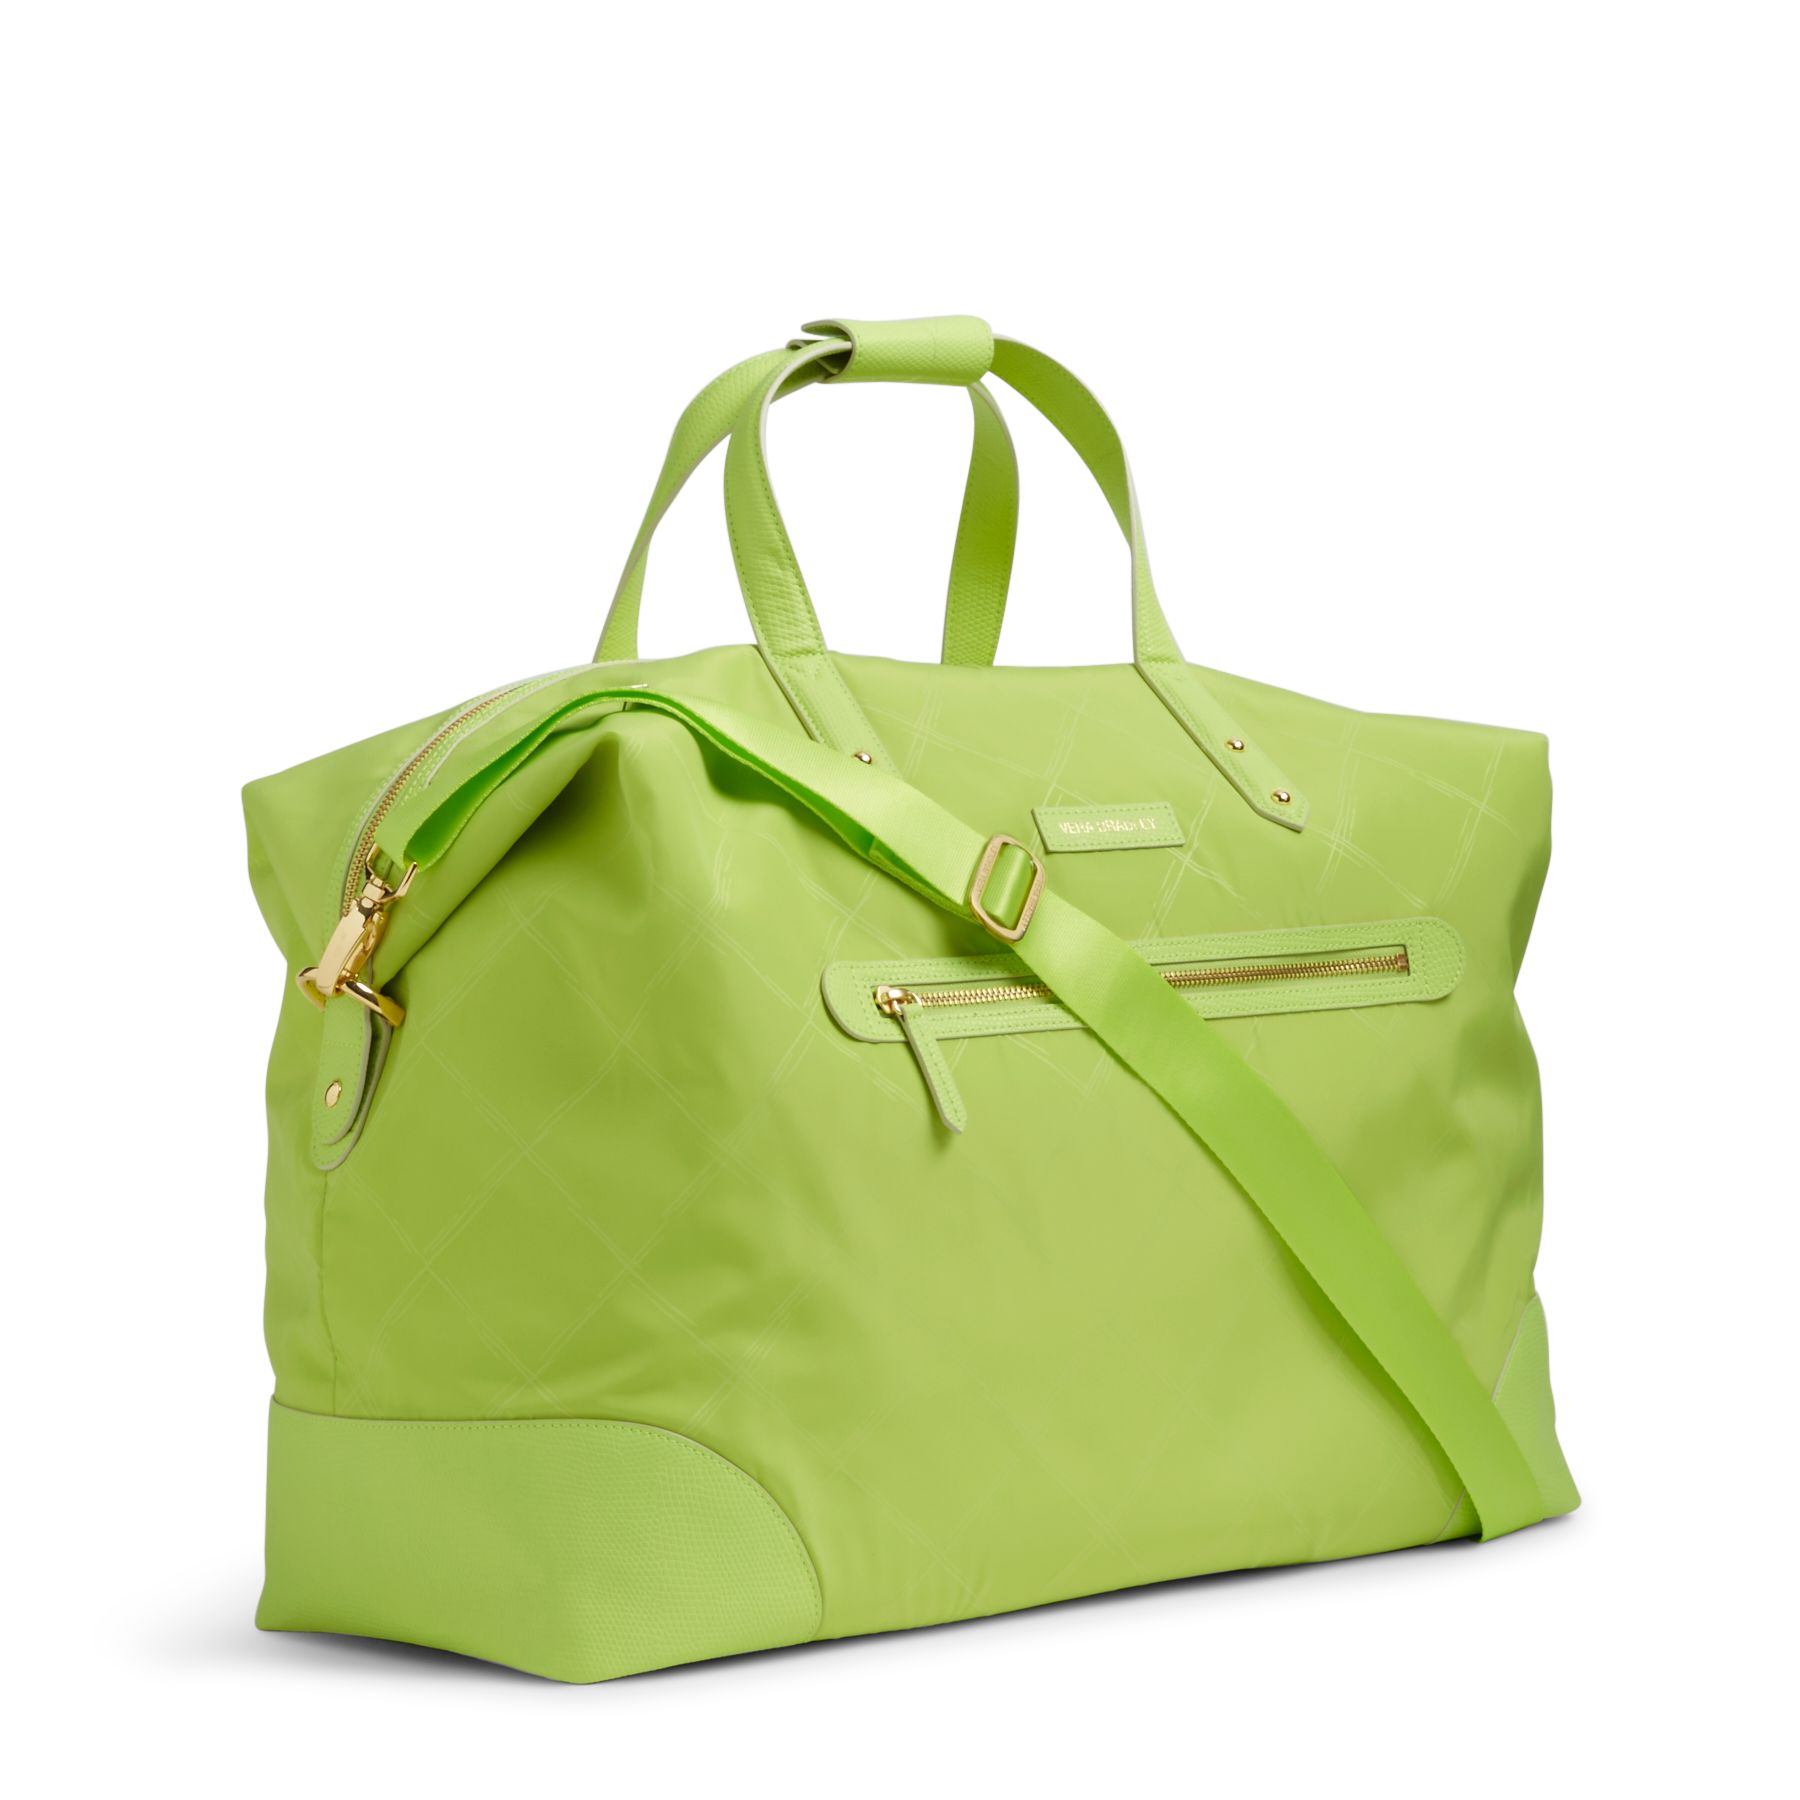 Vera Bradley Preppy Poly Travel Duffel Bag | eBay